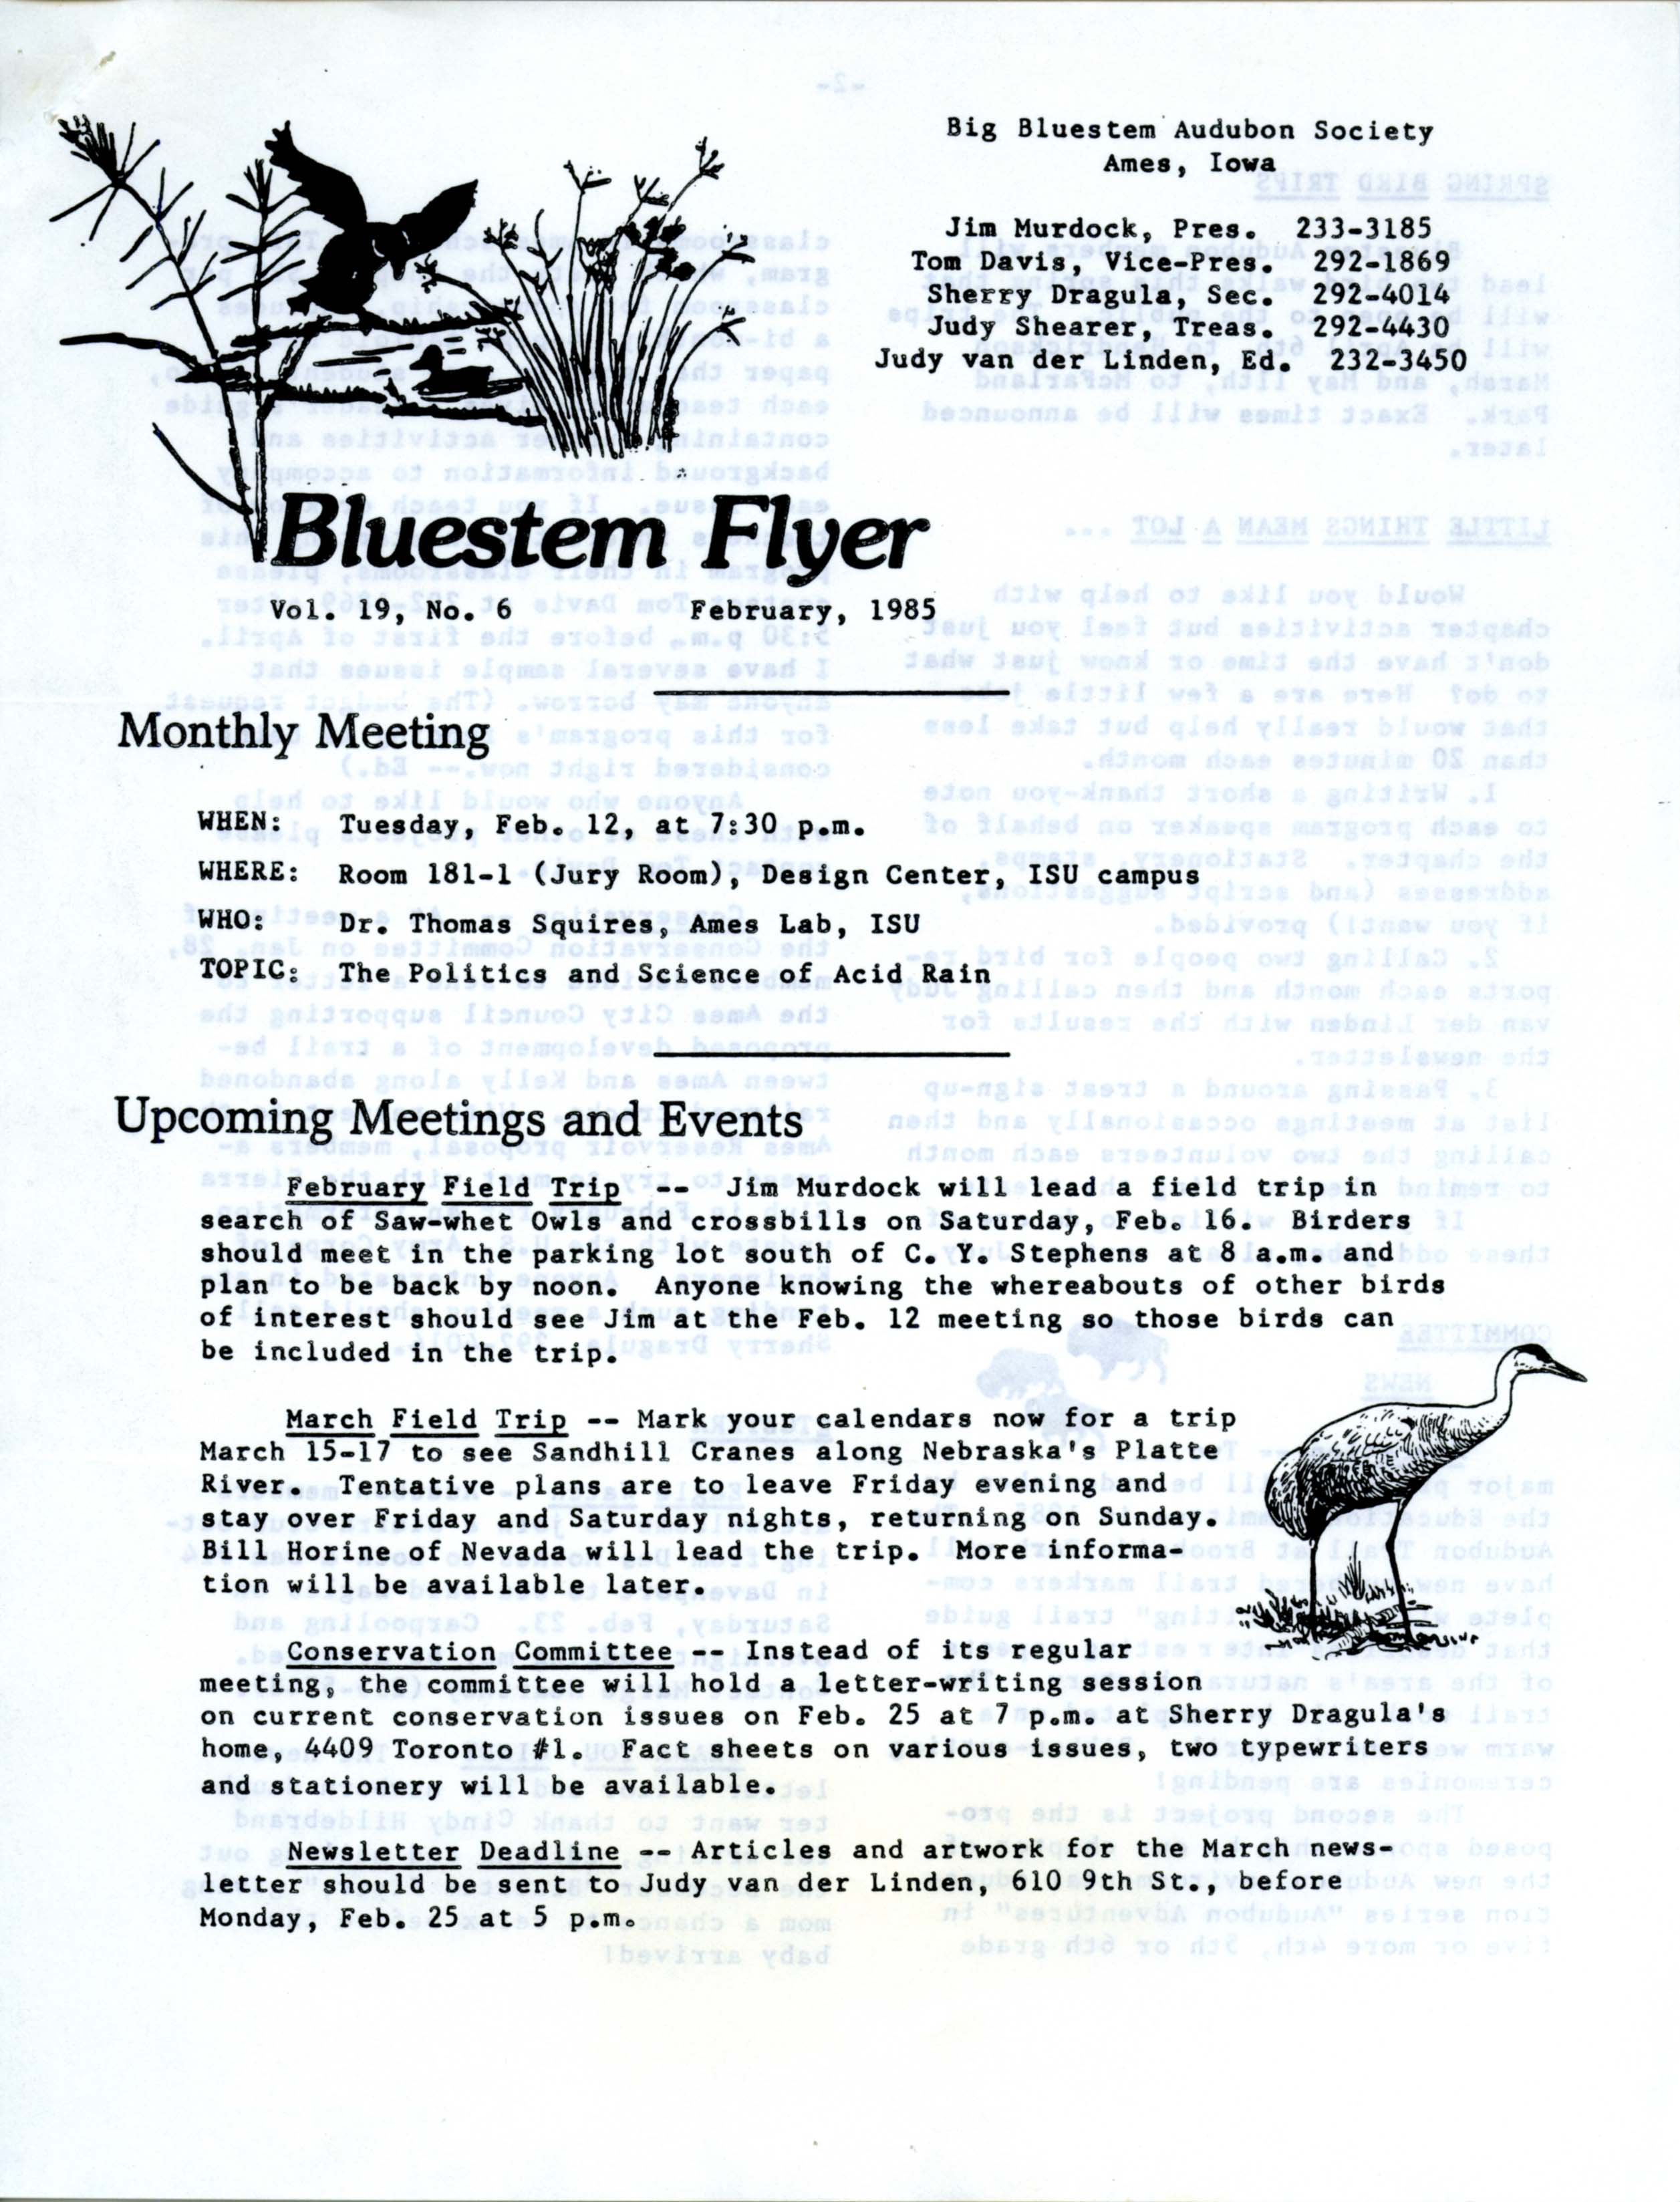 Bluestem Flyer, Volume 19, Number 6, February 1985